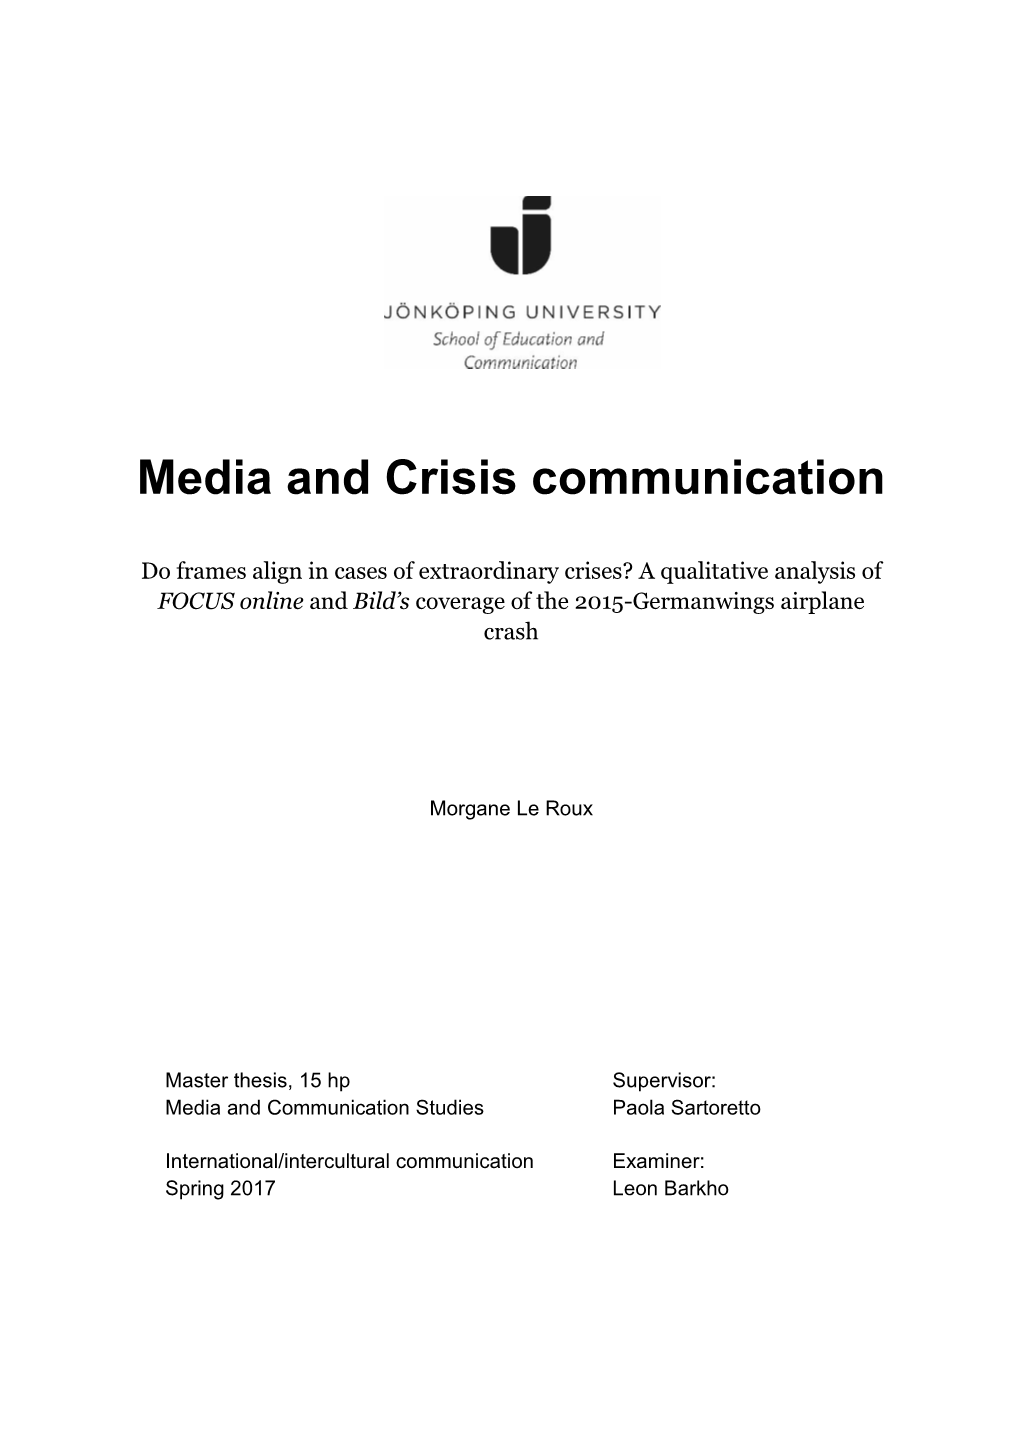 Media and Crisis Communication